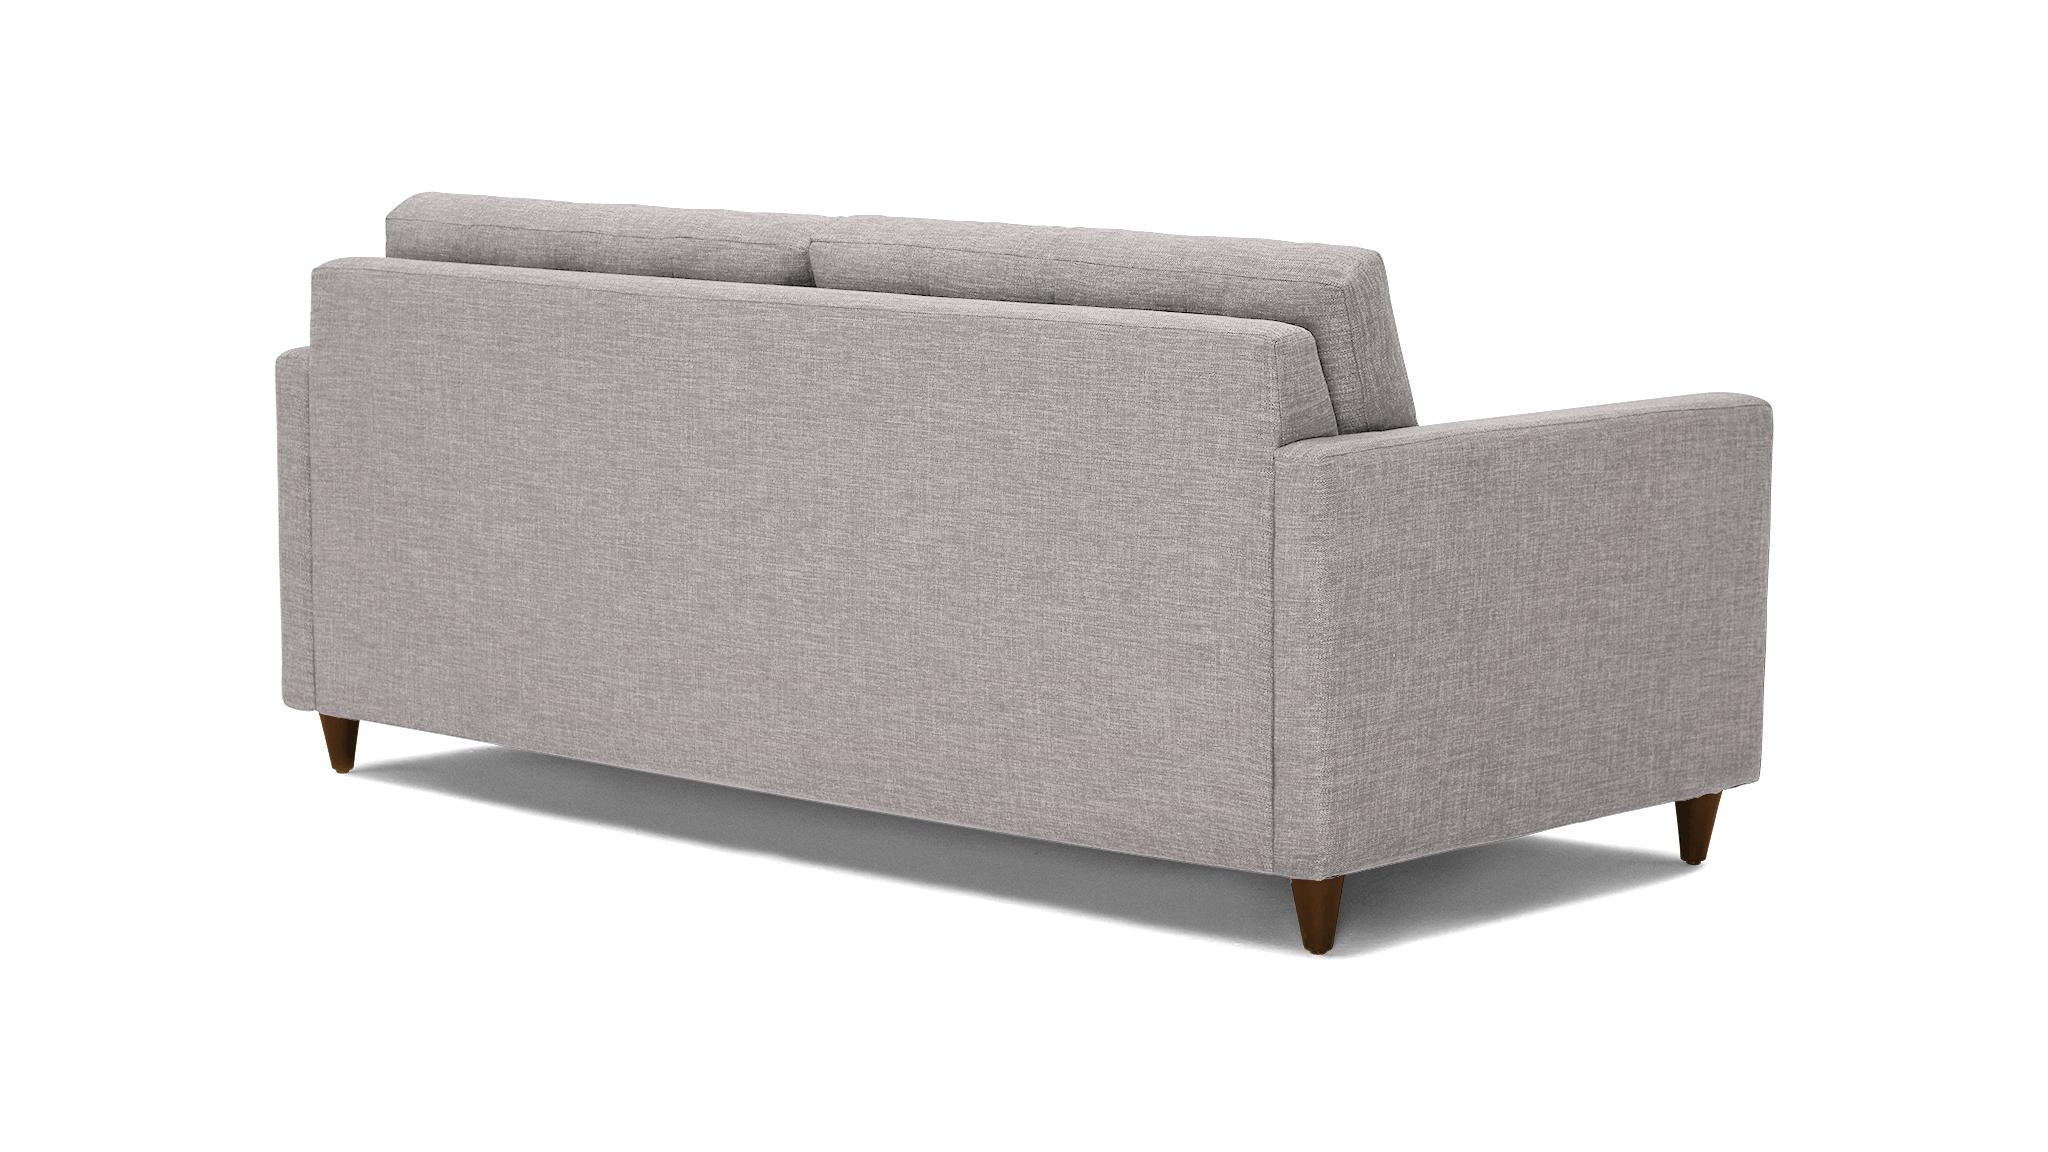 Purple Eliot Mid Century Modern Sleeper Sofa - Sunbrella Premier Wisteria - Mocha - Standard Foam - Image 3